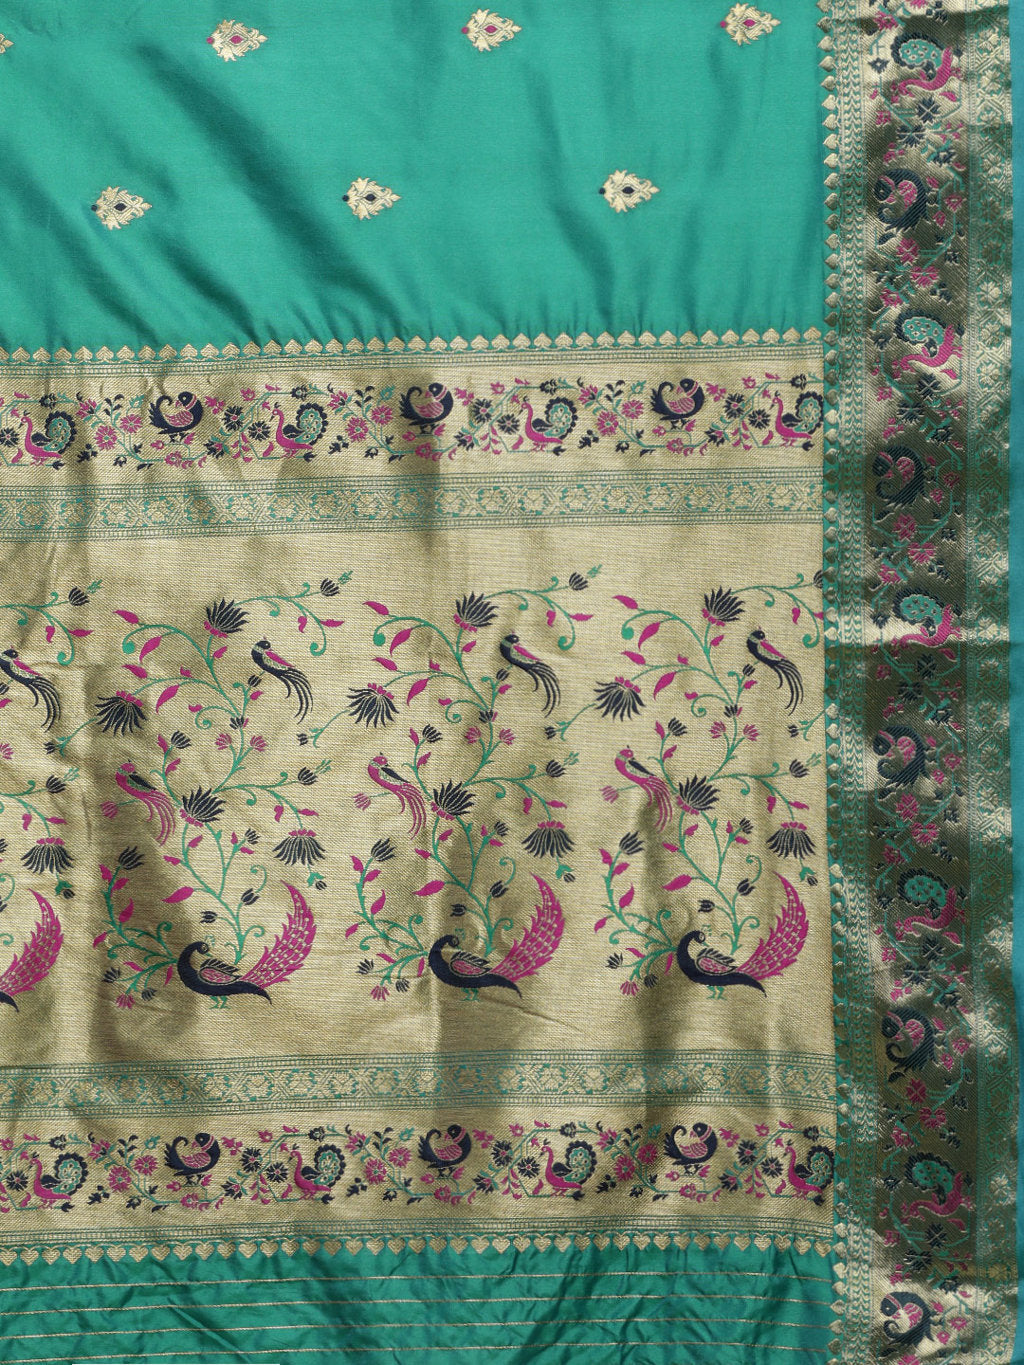 Women's Rama Silk Woven Work Traditional Saree - Sangam Prints